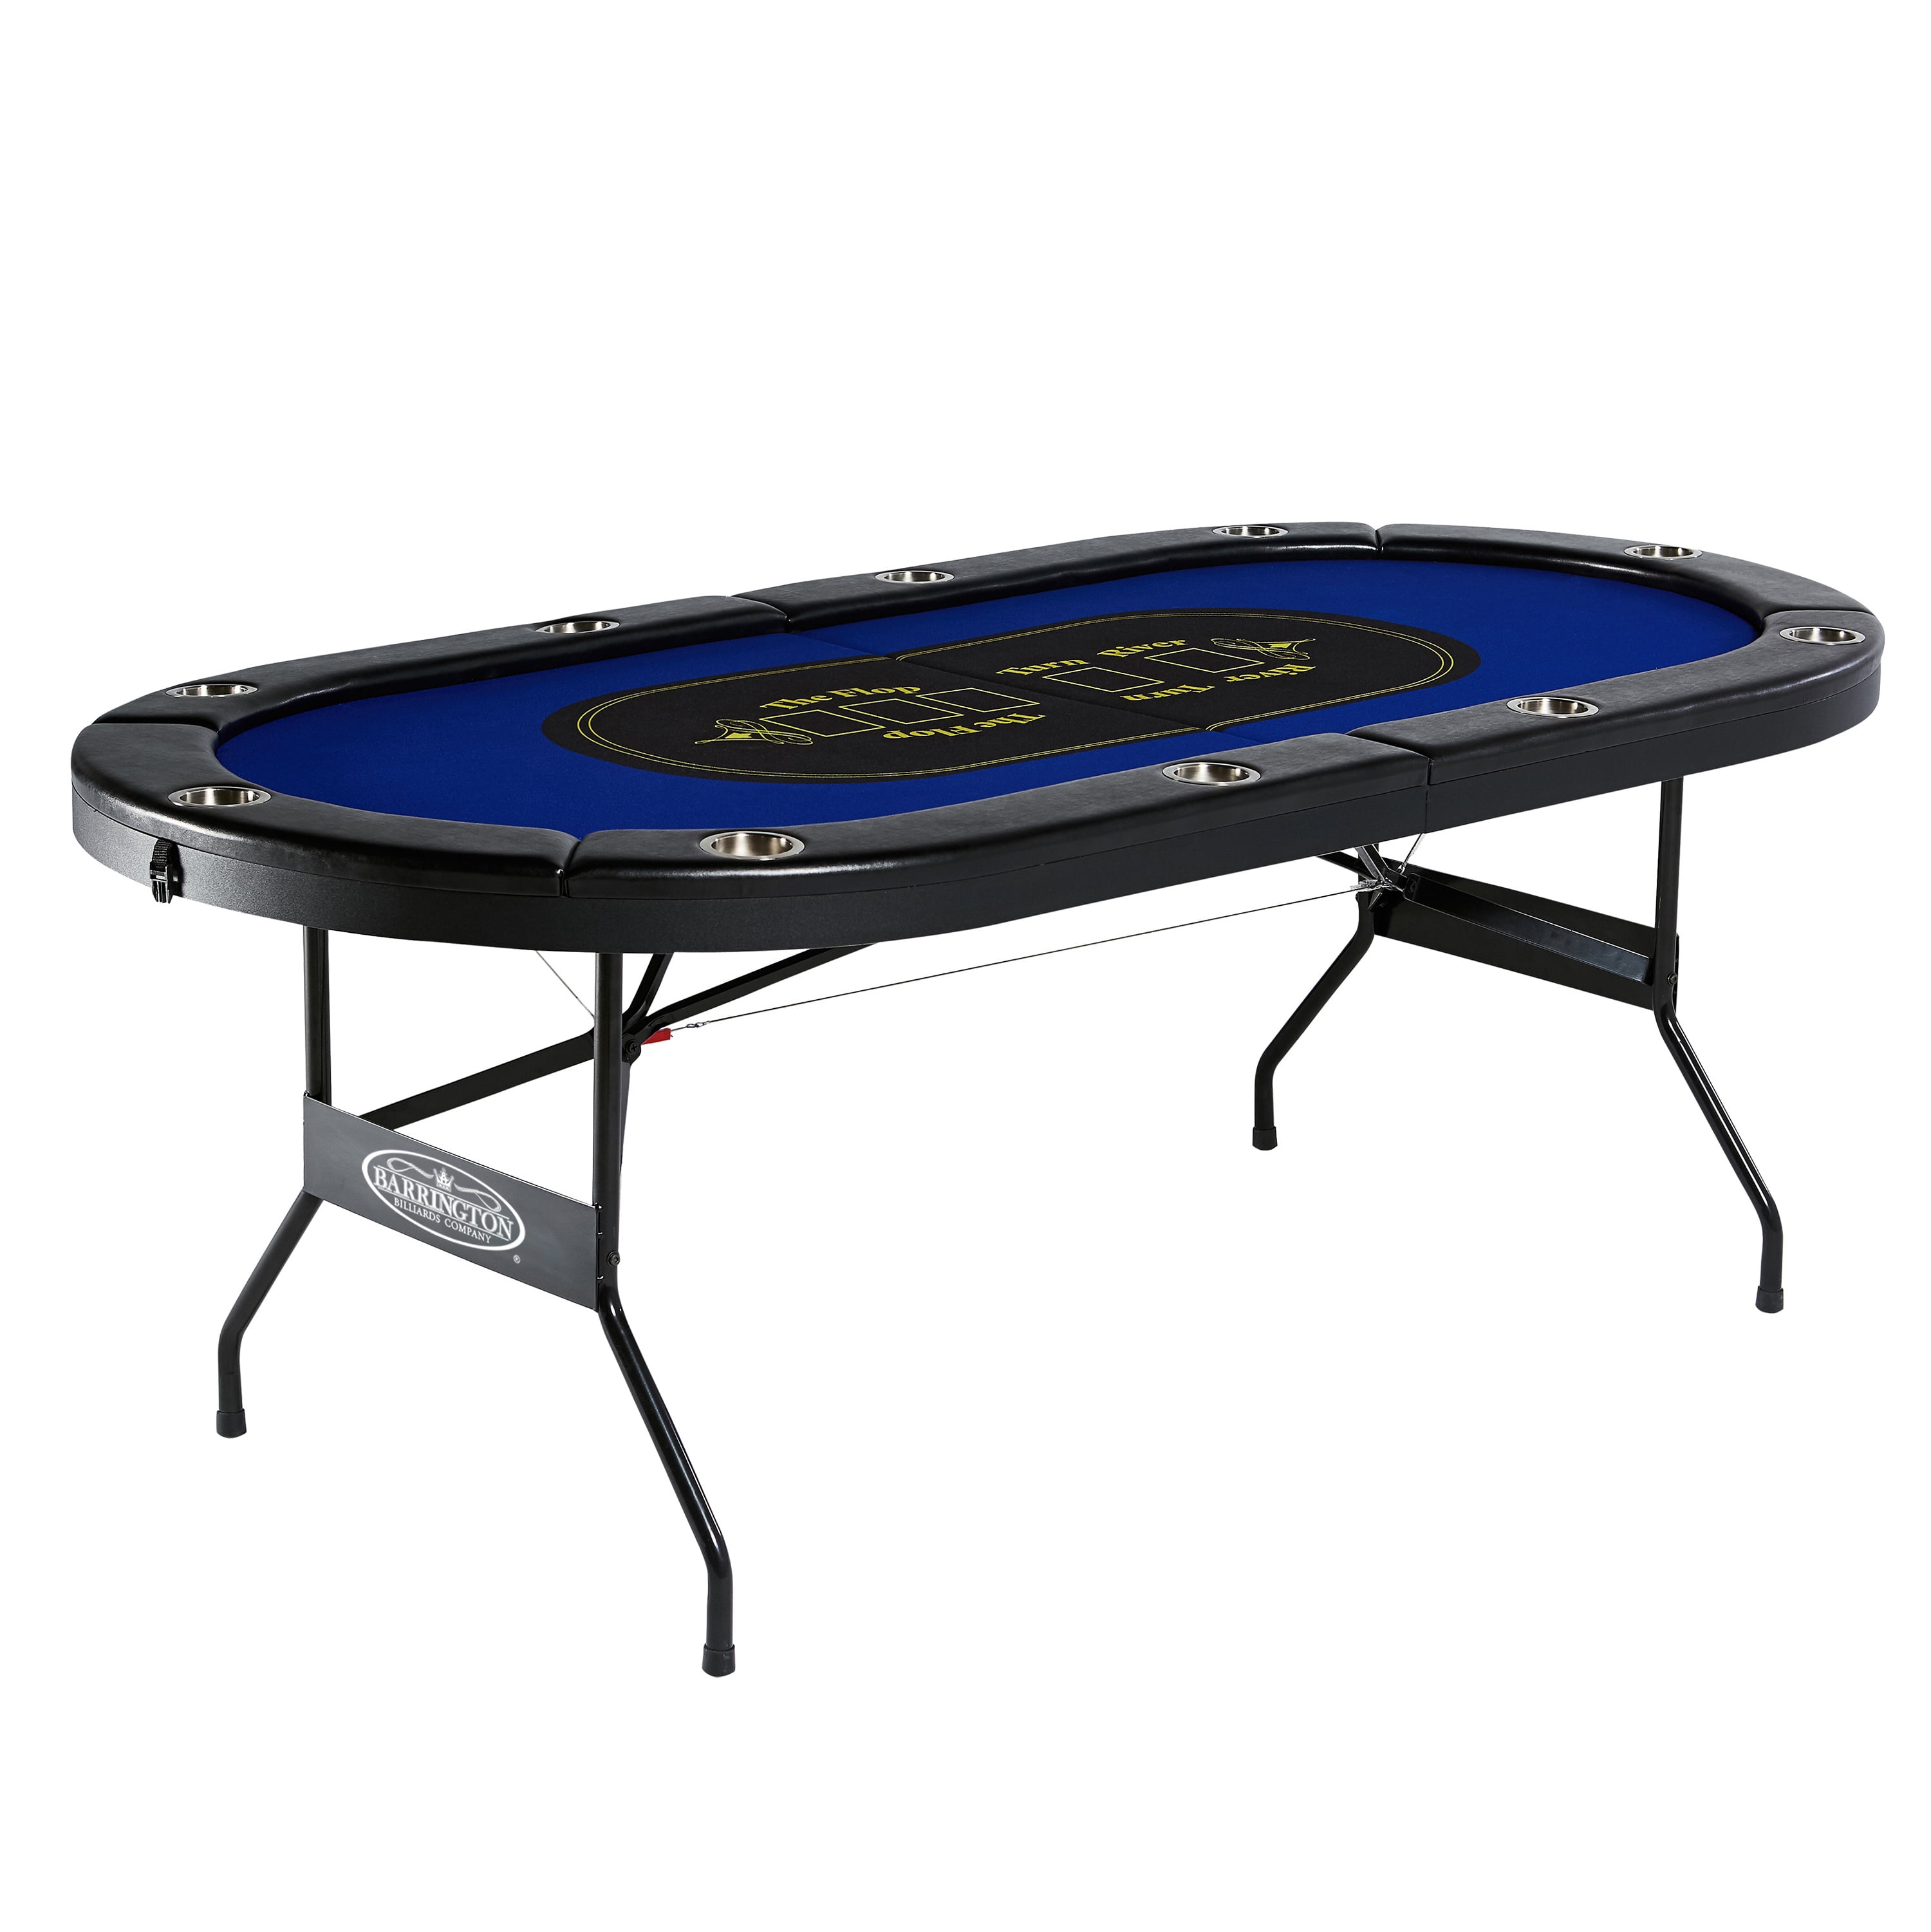 10-Player Poker Table Home Game Tournament Compact Foldable Casino Barrington 